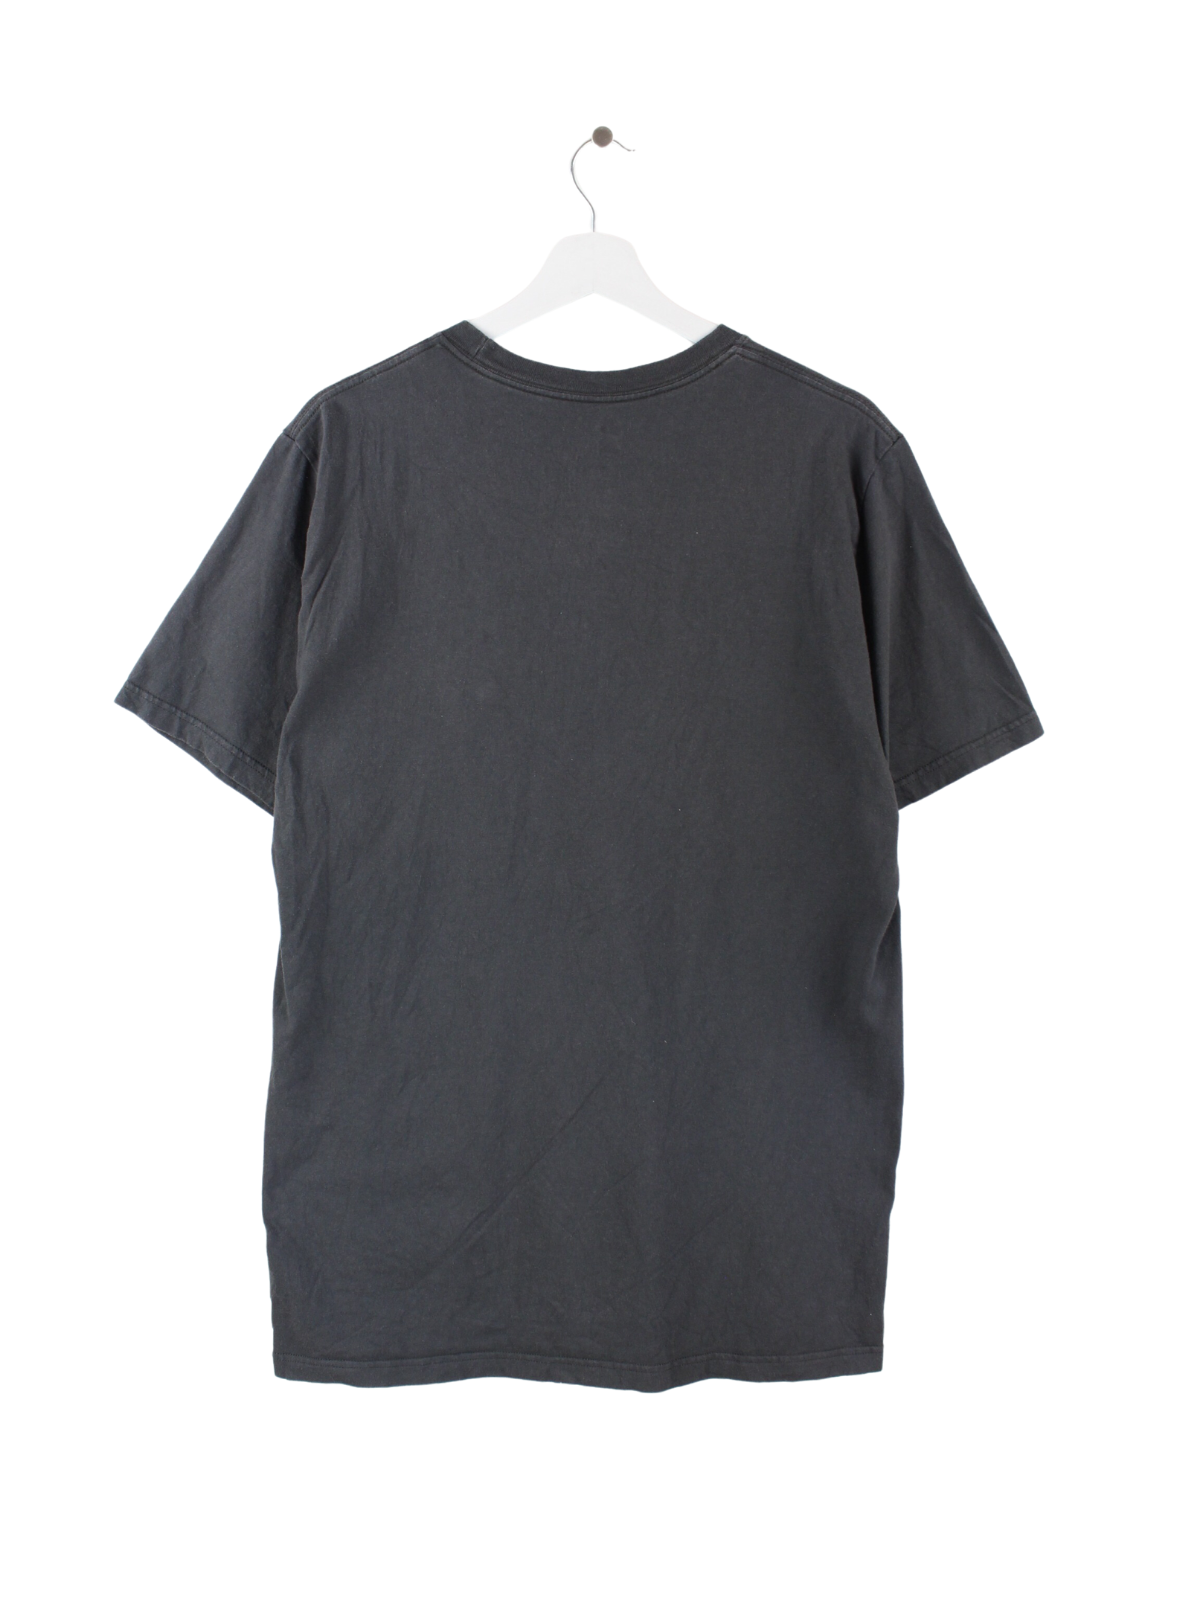 Nike Print T-Shirt Gray L